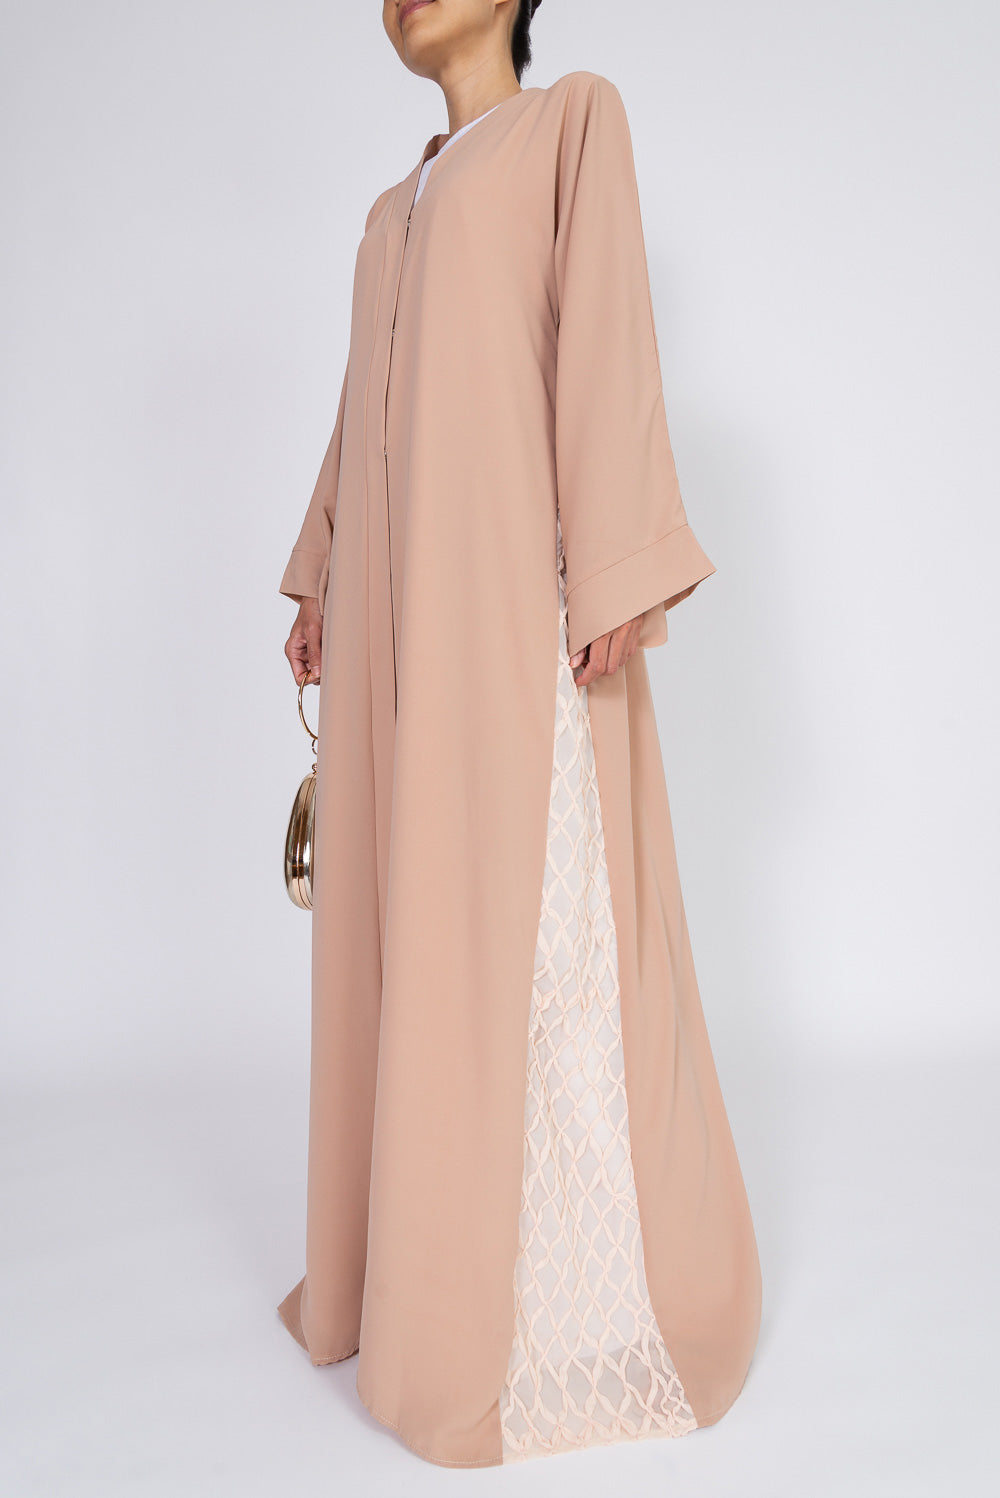 Blush Abaya with Beige Lace